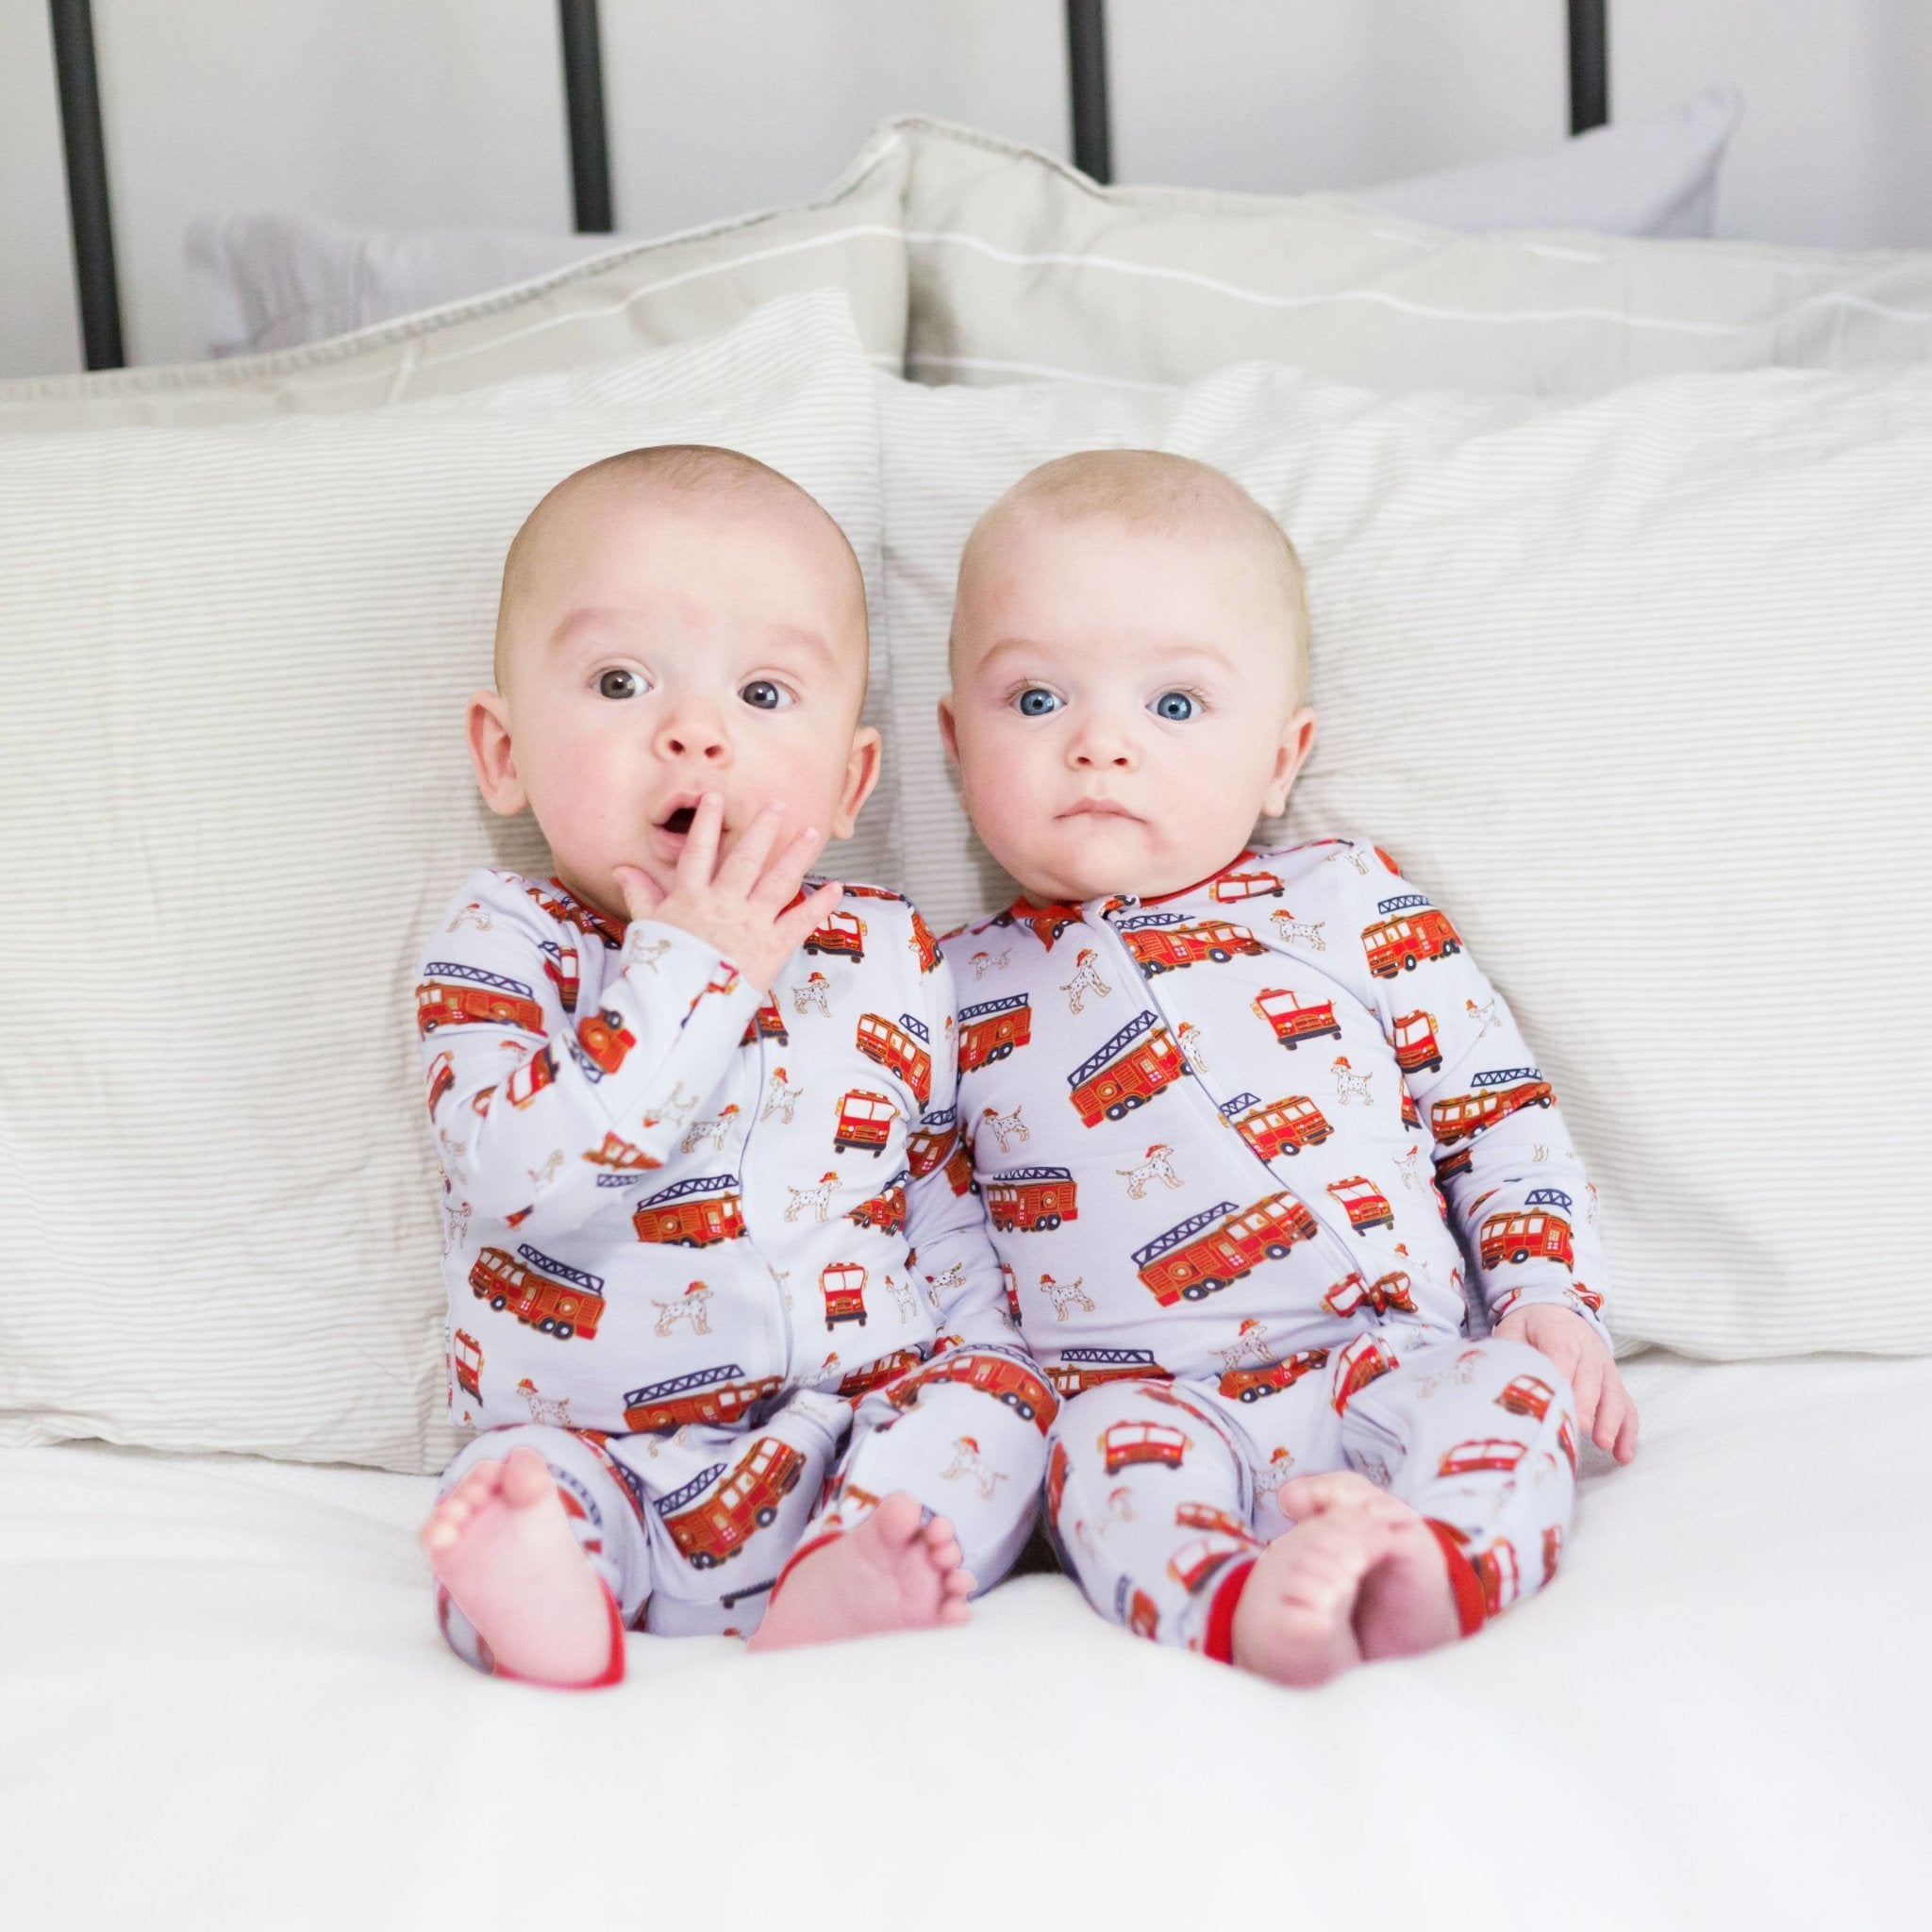 Cozy Baby Pajamas: Shopping Guide - Sleeping Baby